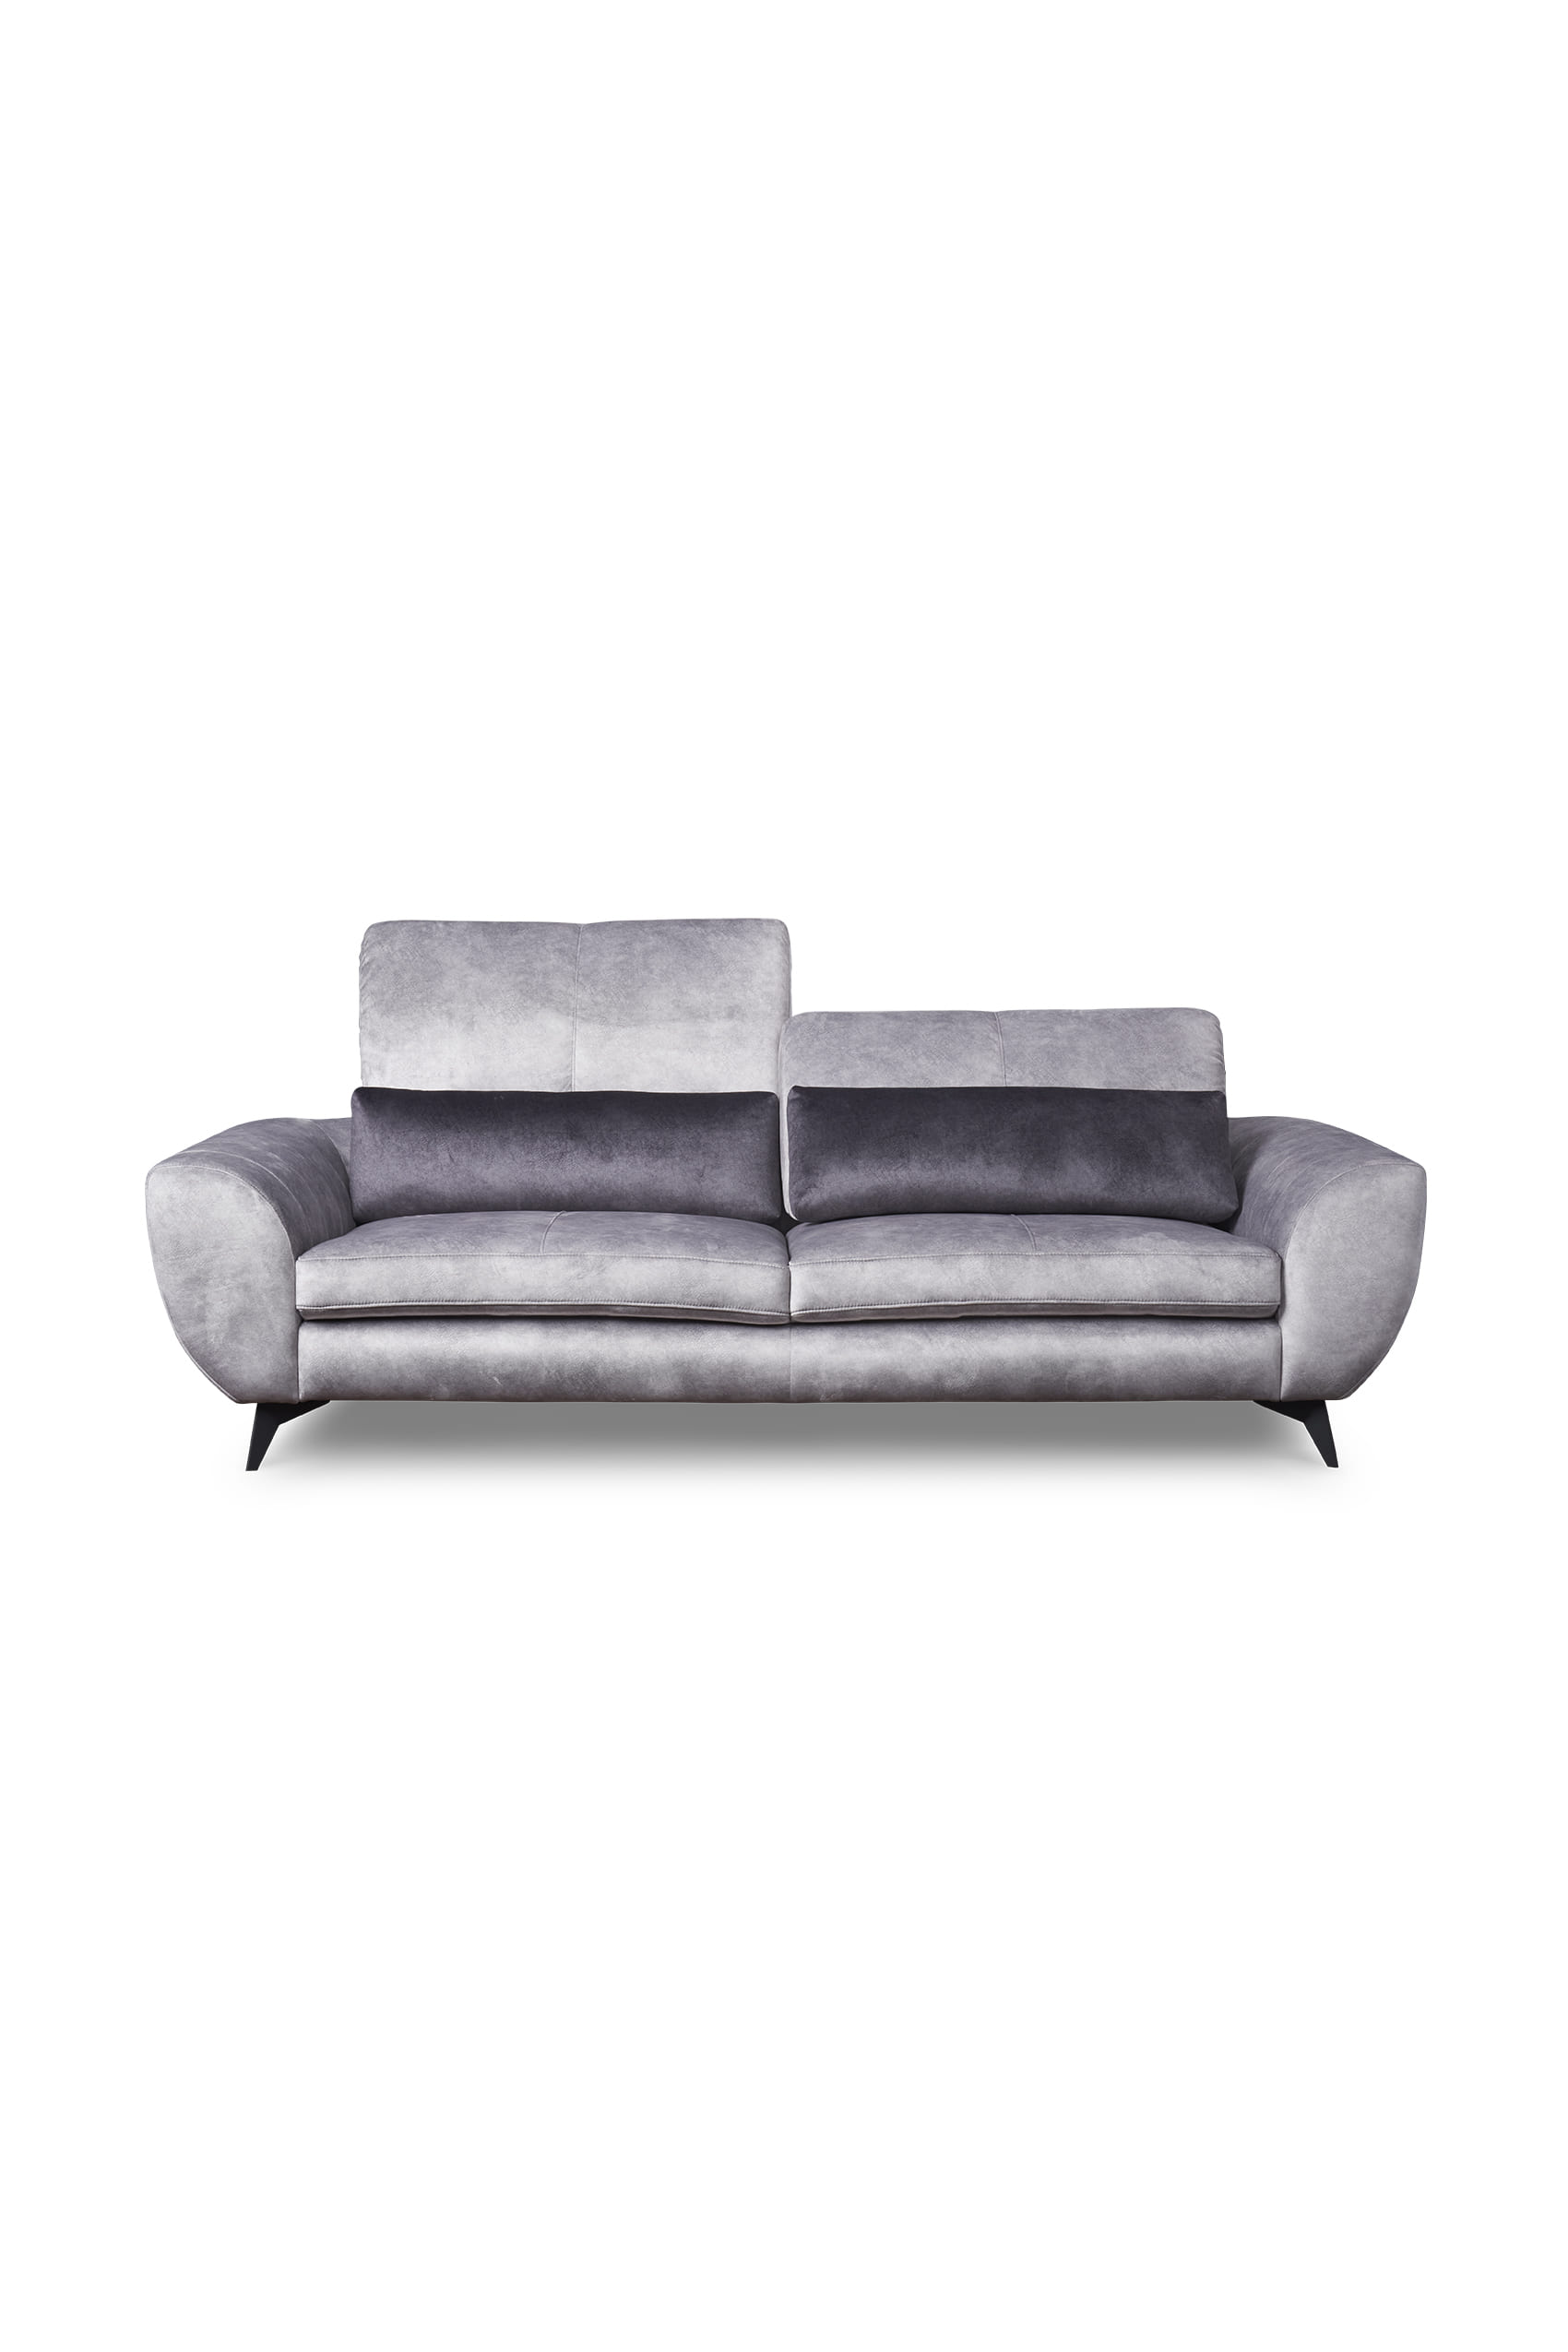 Tomassini High Tech Fabric Sofa with Adjustable Backrest - TheFurniture.com.sg